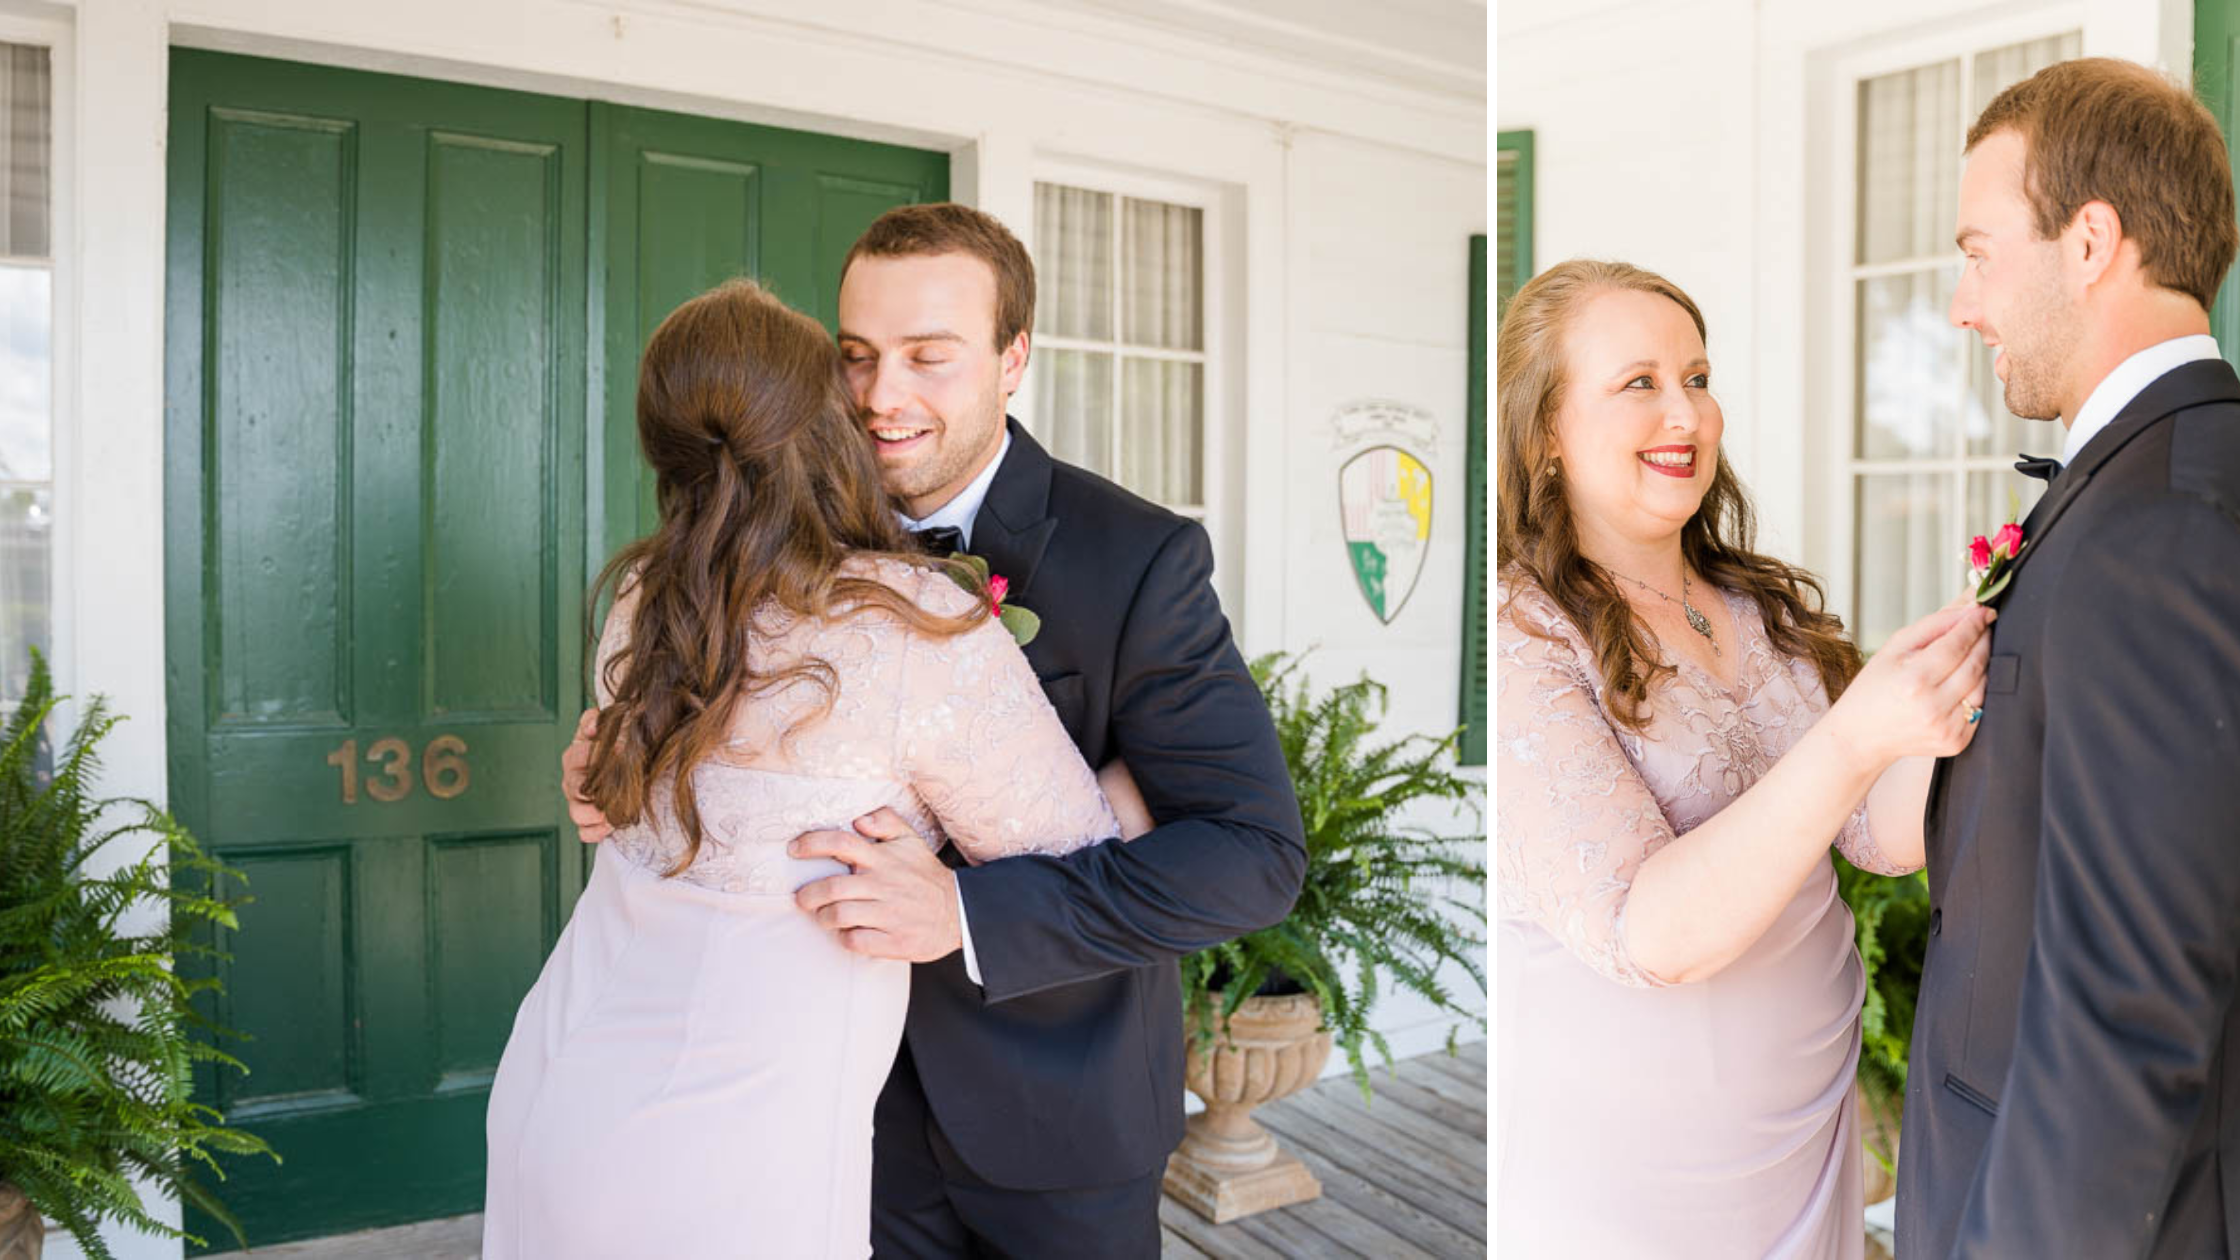 The Kimball House Wedding in Jackson Alabama Wedding Photography Photographed by Kristen Marcus Photography | Alabama Wedding Photographer